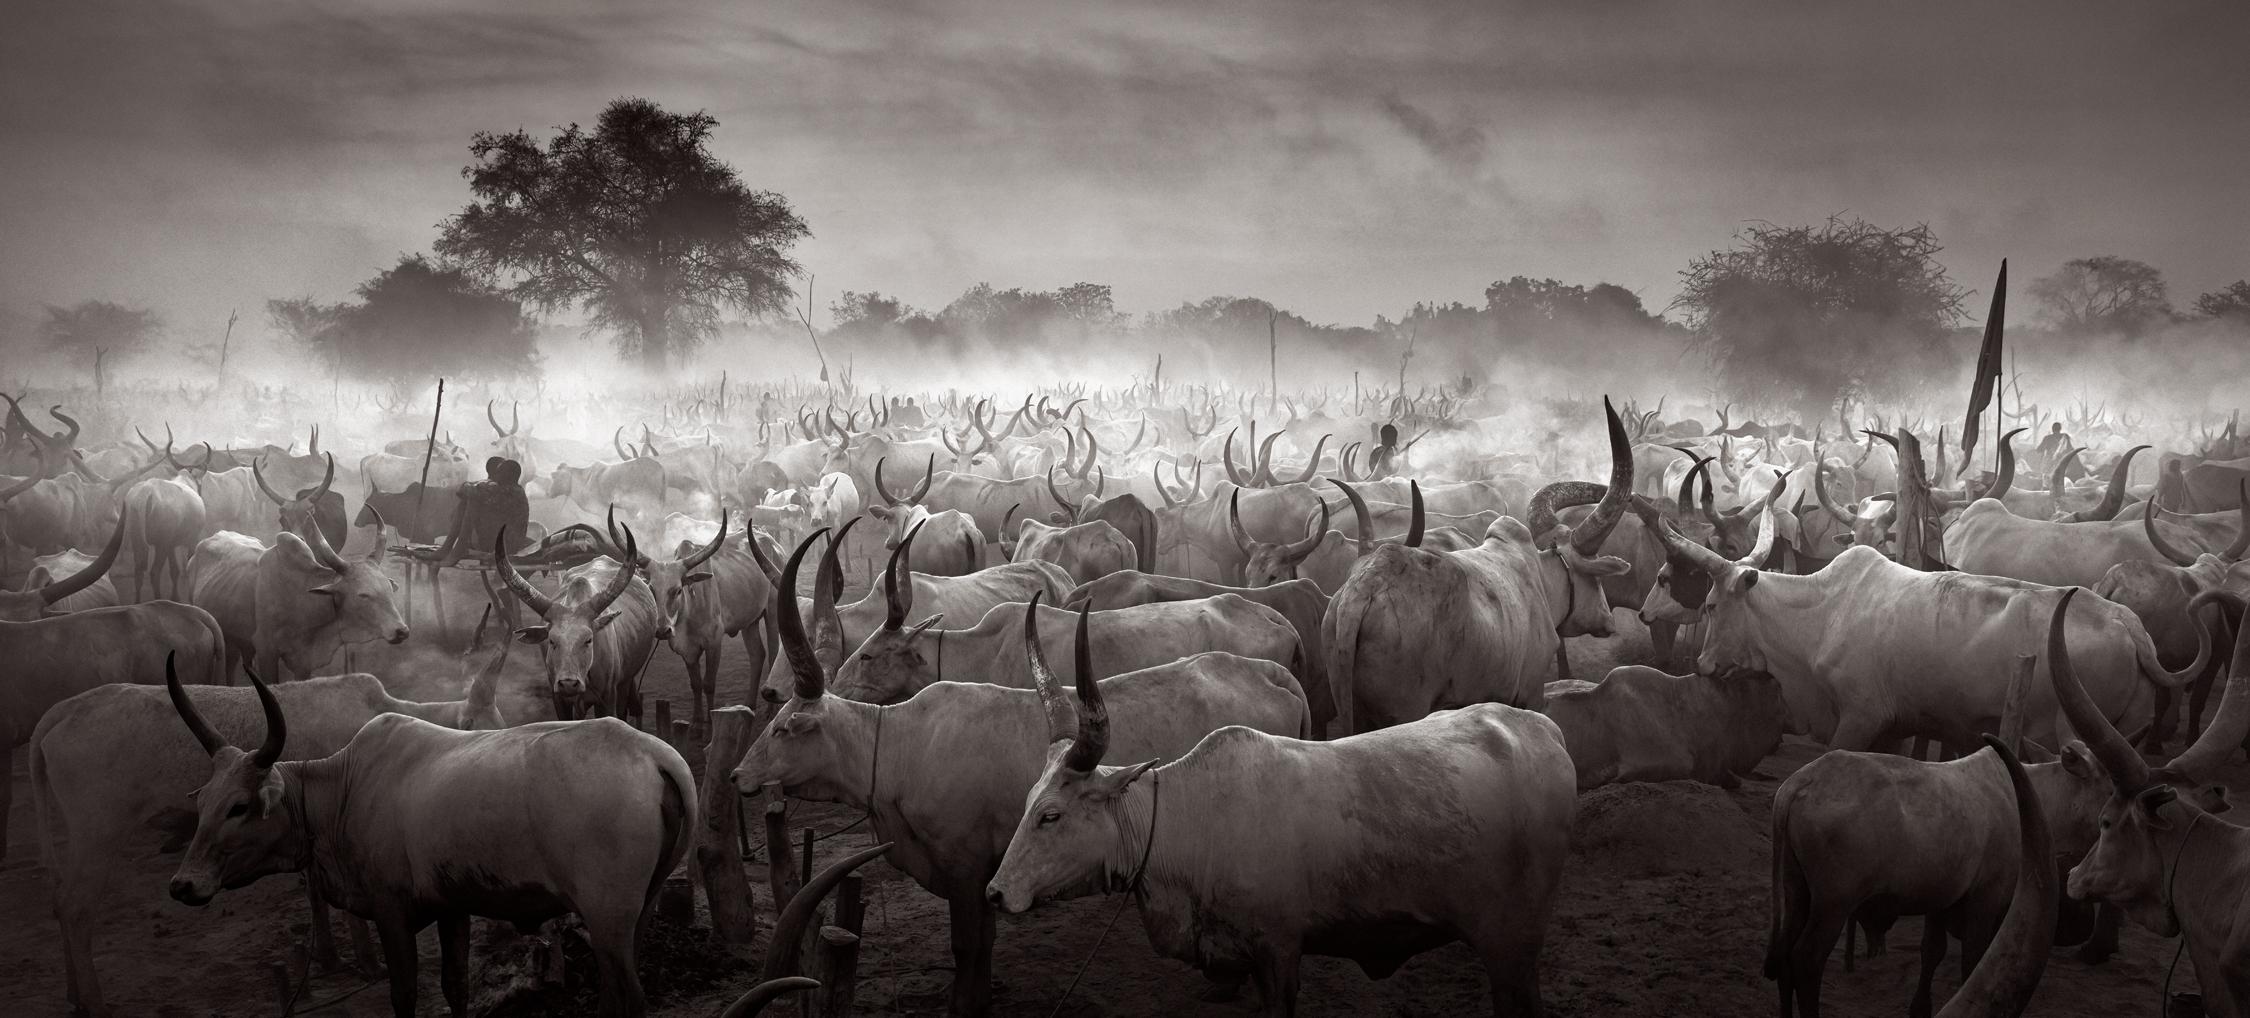 Drew Doggett Black and White Photograph - Expansive, Surreal Black & white Image of the Mundari Cattle Camp